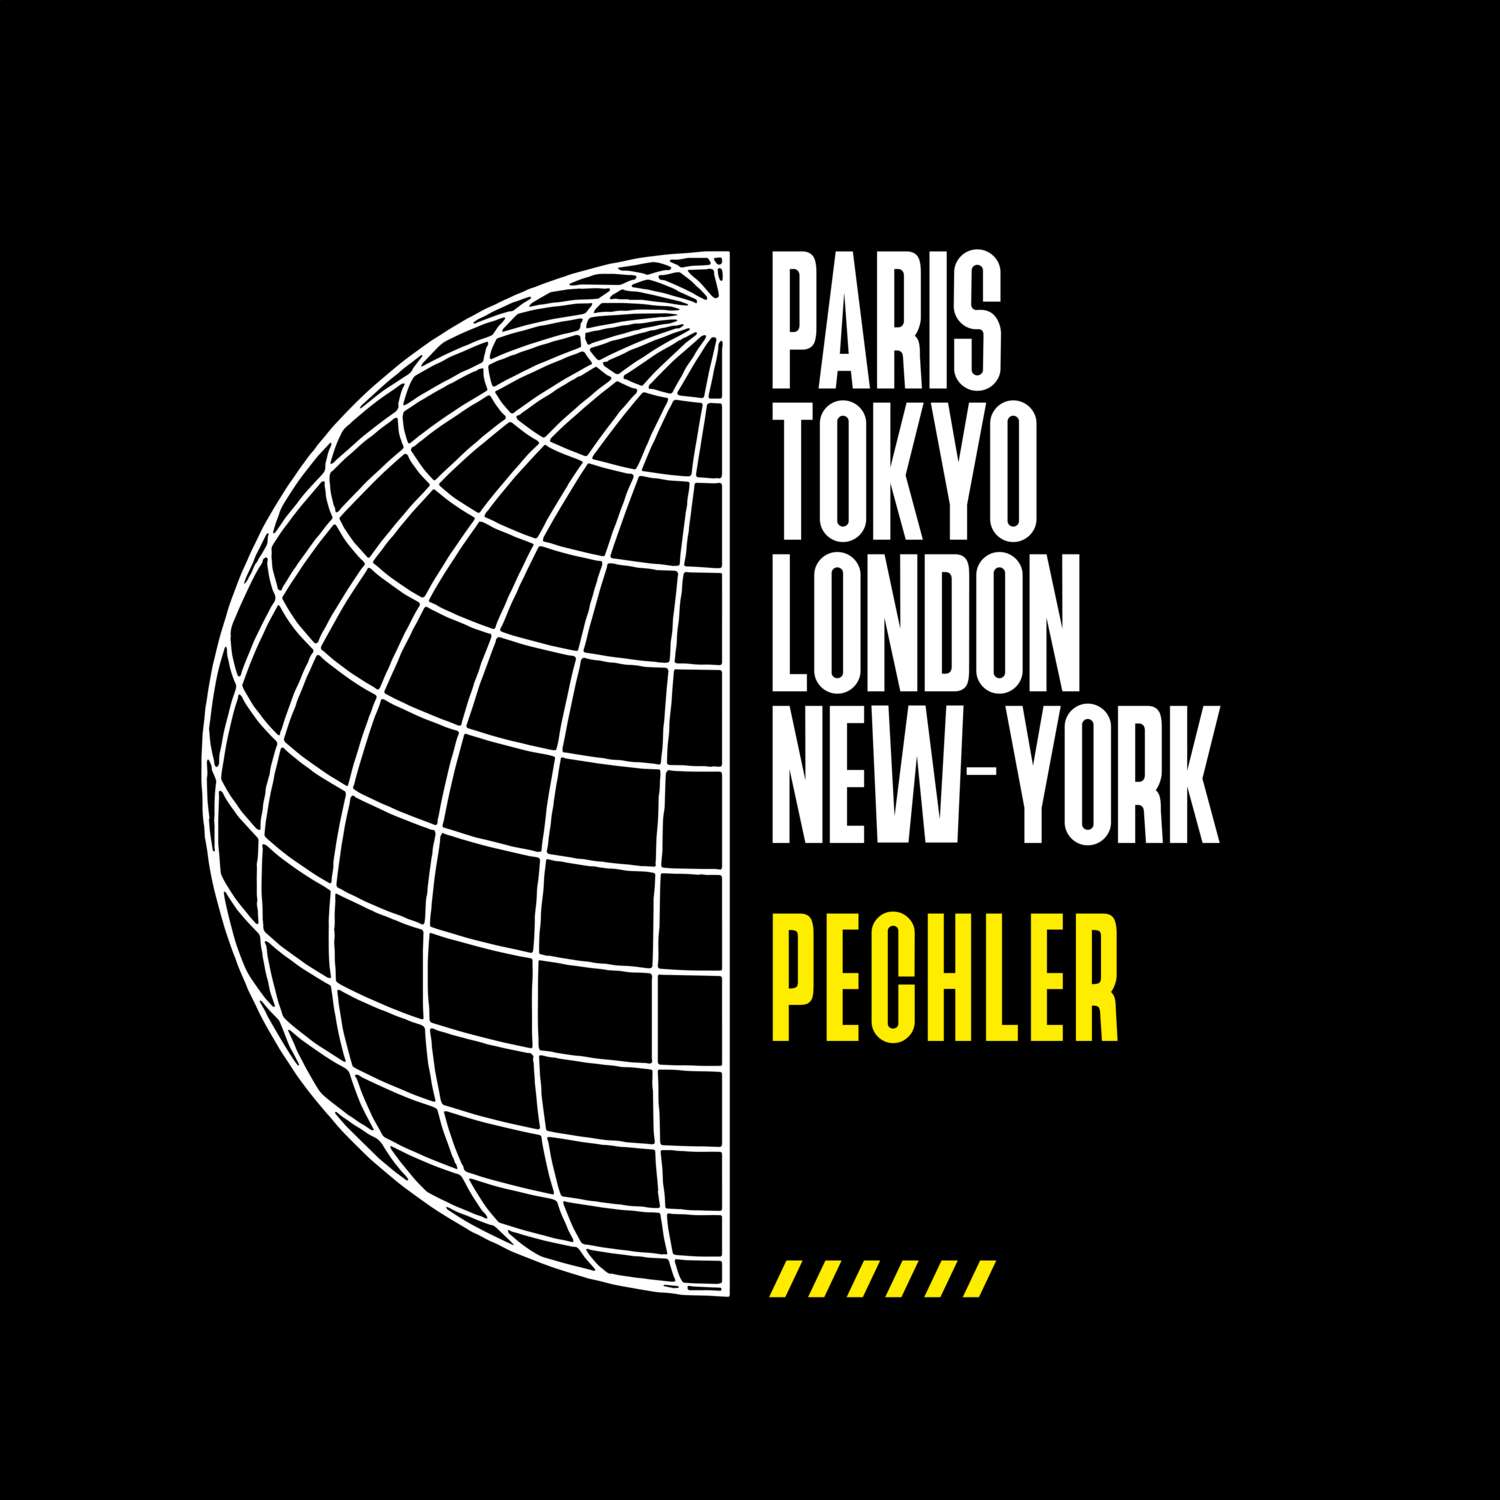 Pechler T-Shirt »Paris Tokyo London«